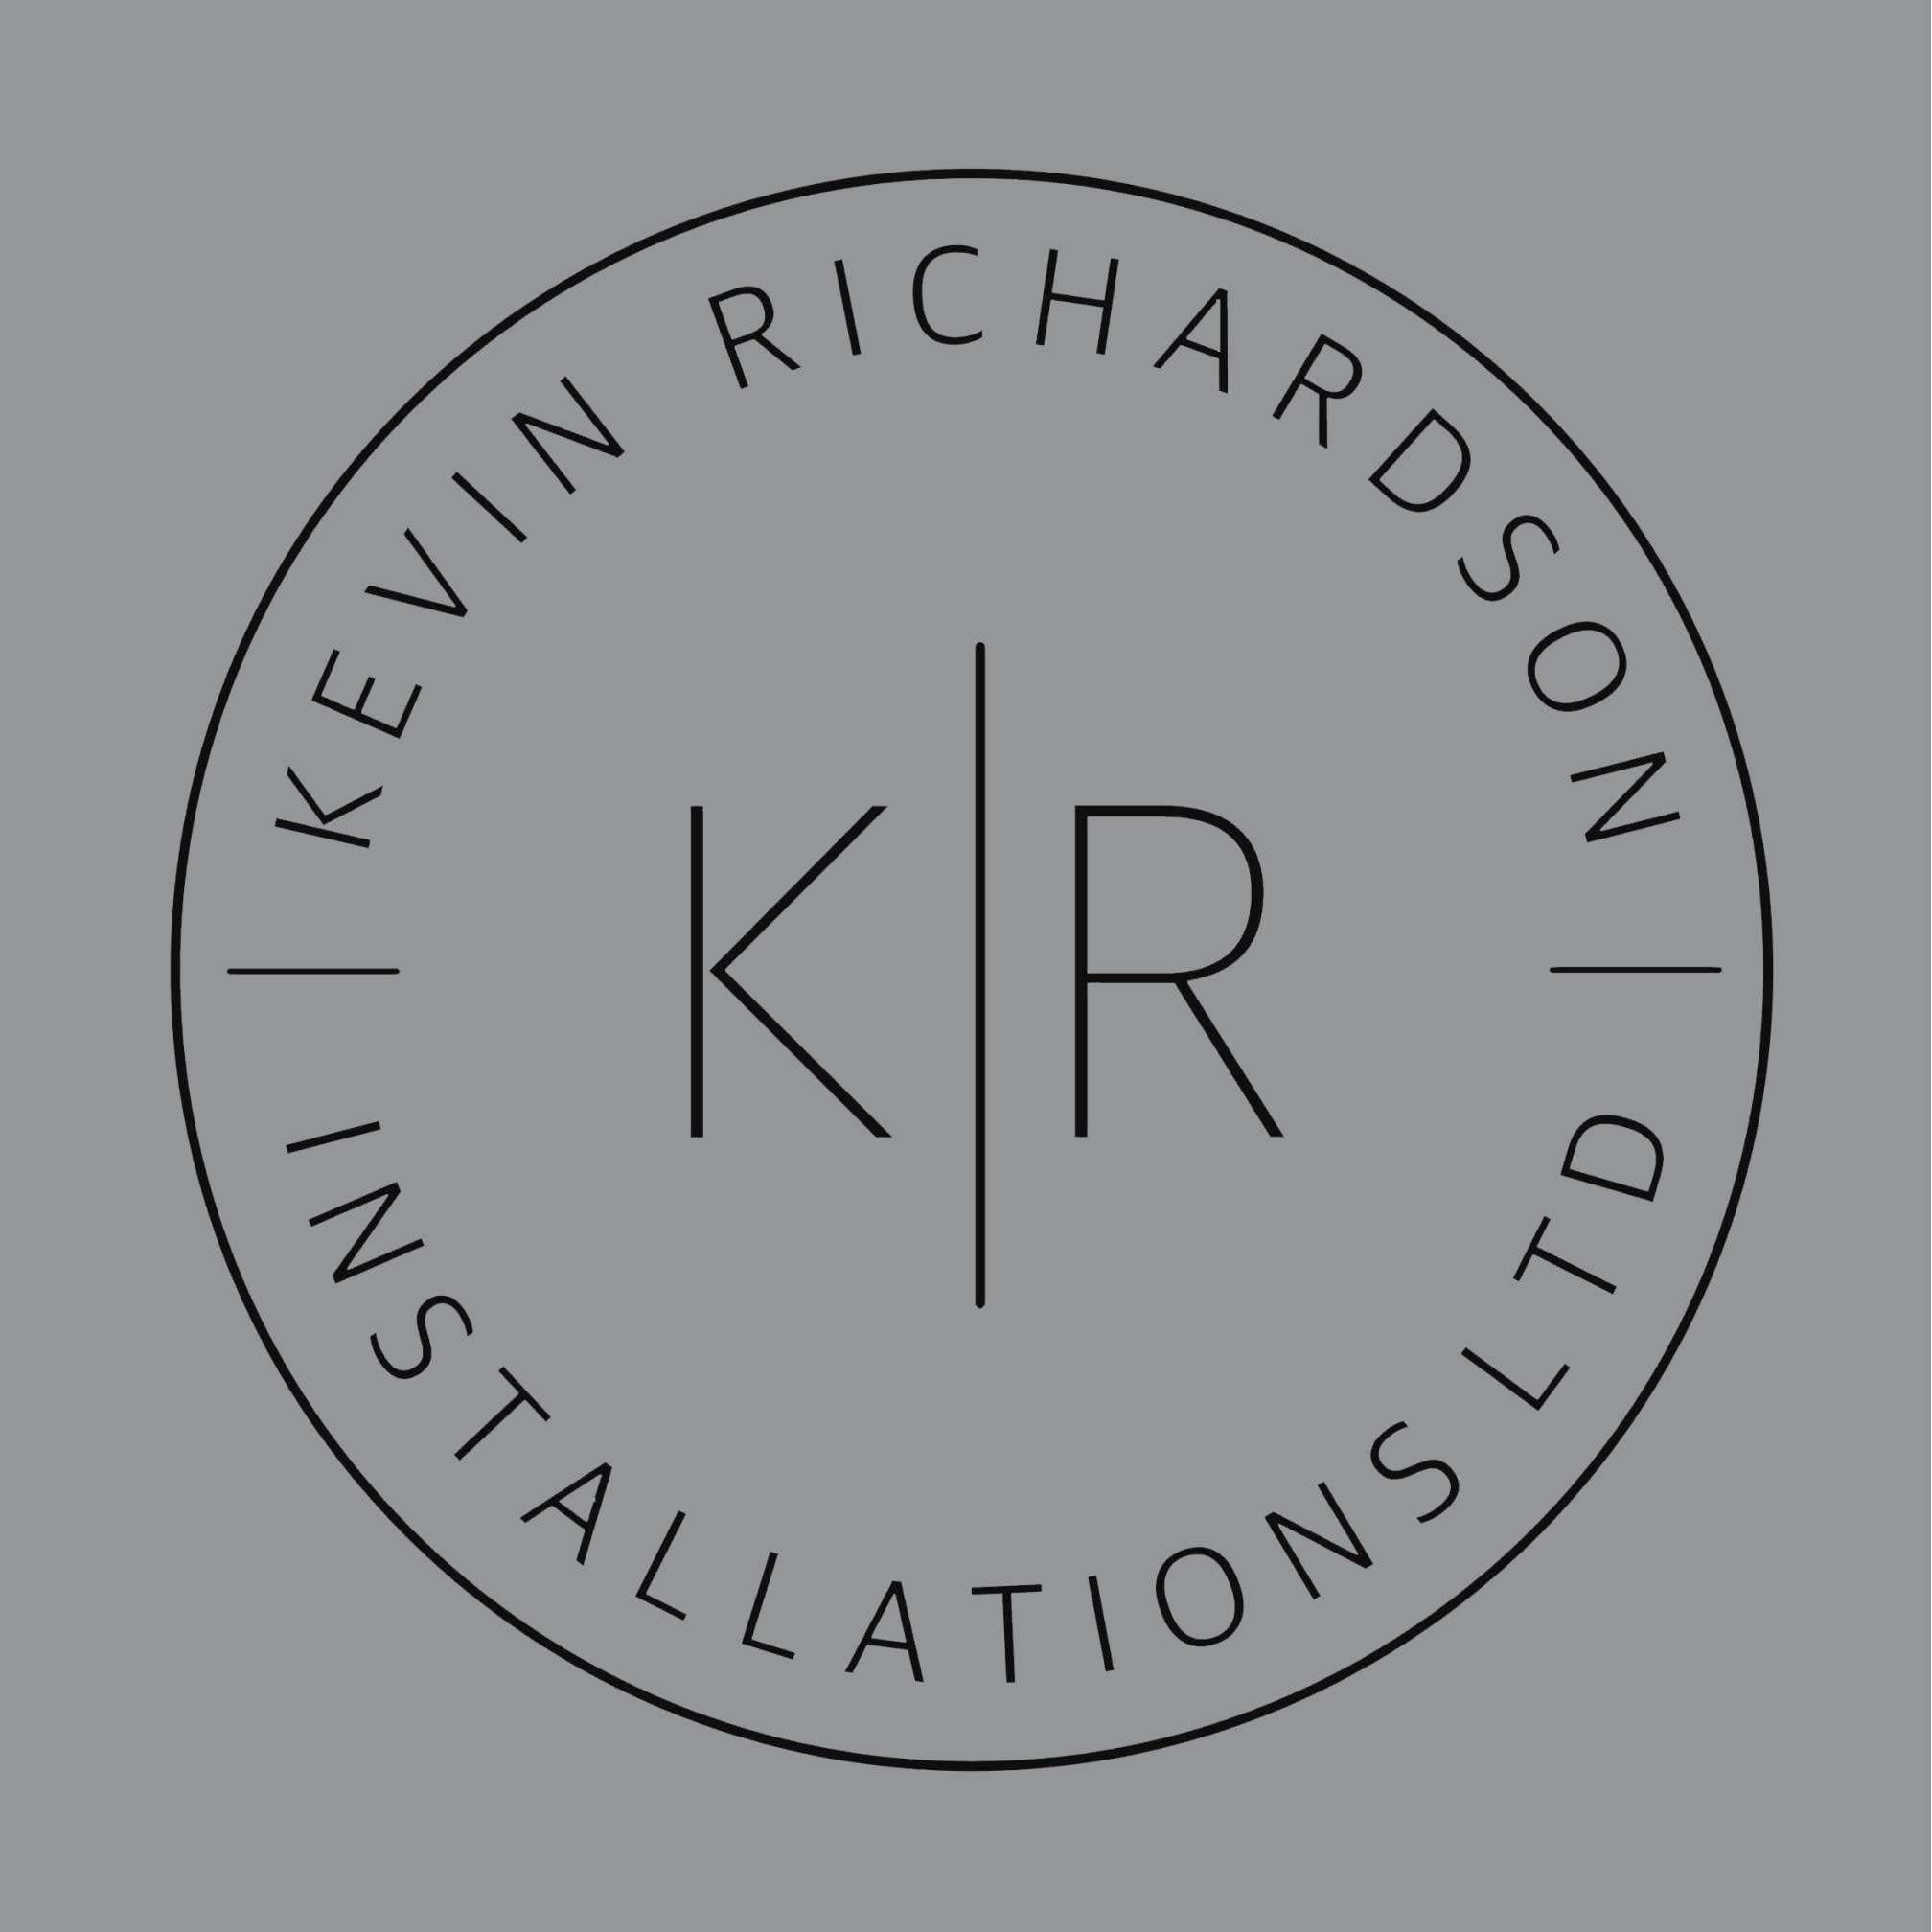 LOGO Kevin Richardson Installations Ltd Newcastle Upon Tyne 01912 649207